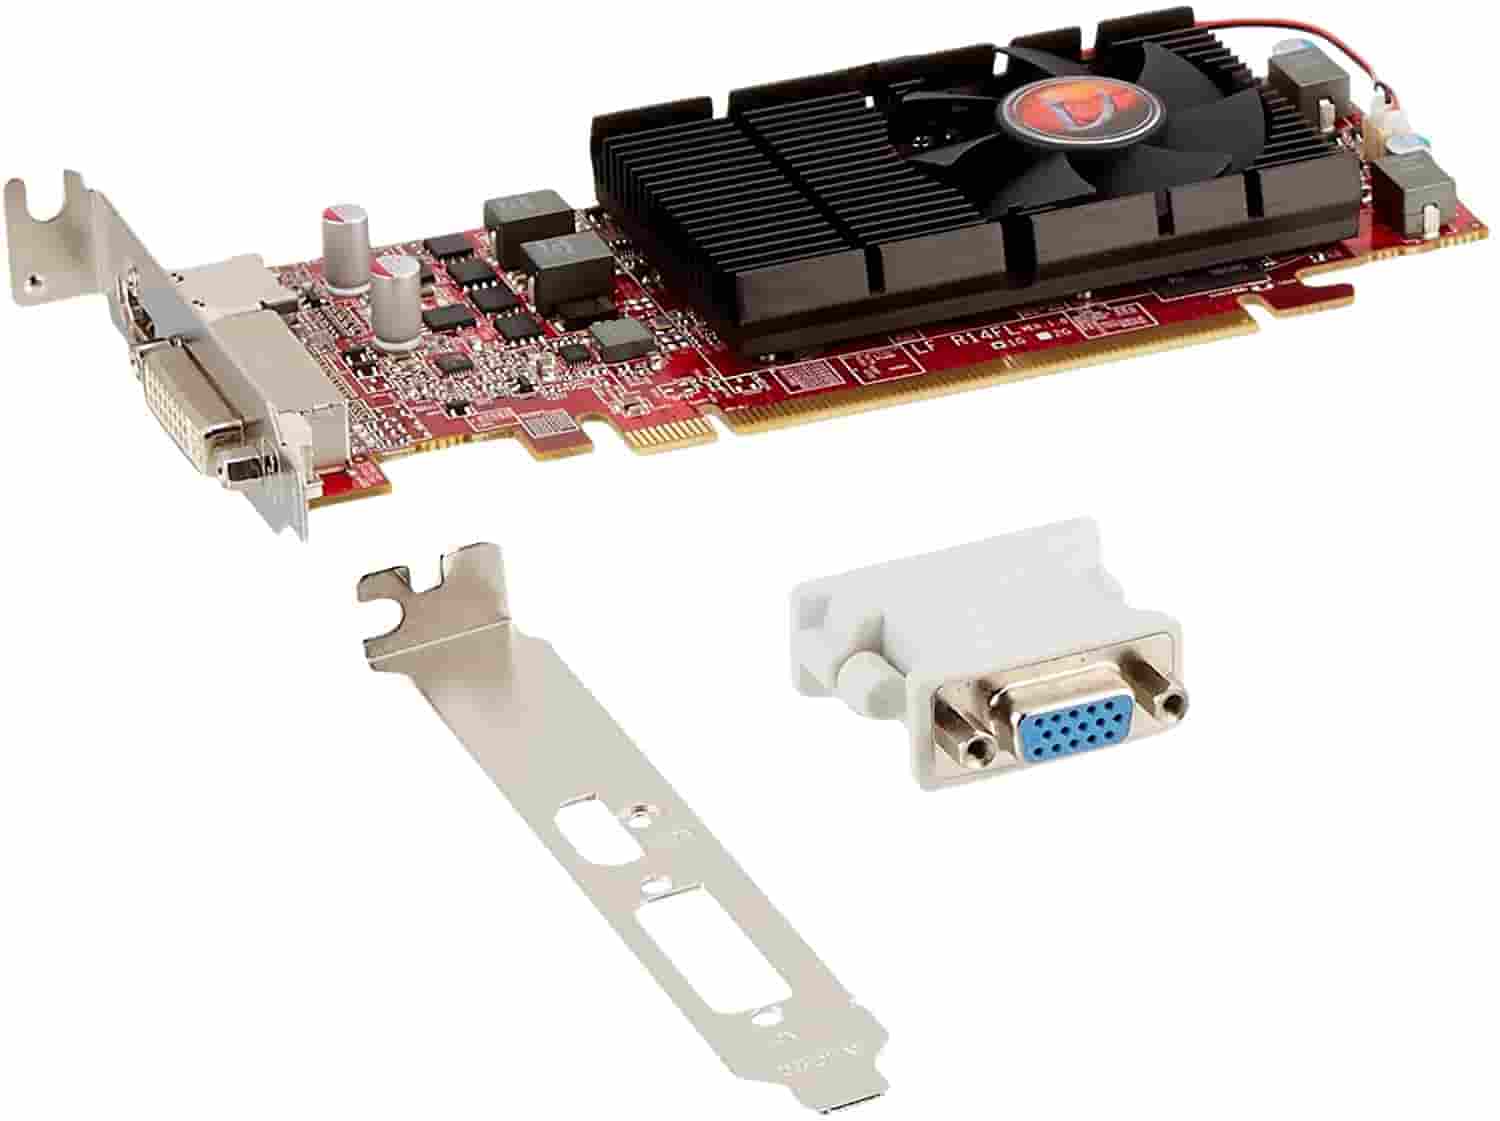 10. VisionTek Radeon 7750 – best budget 4k graphics card